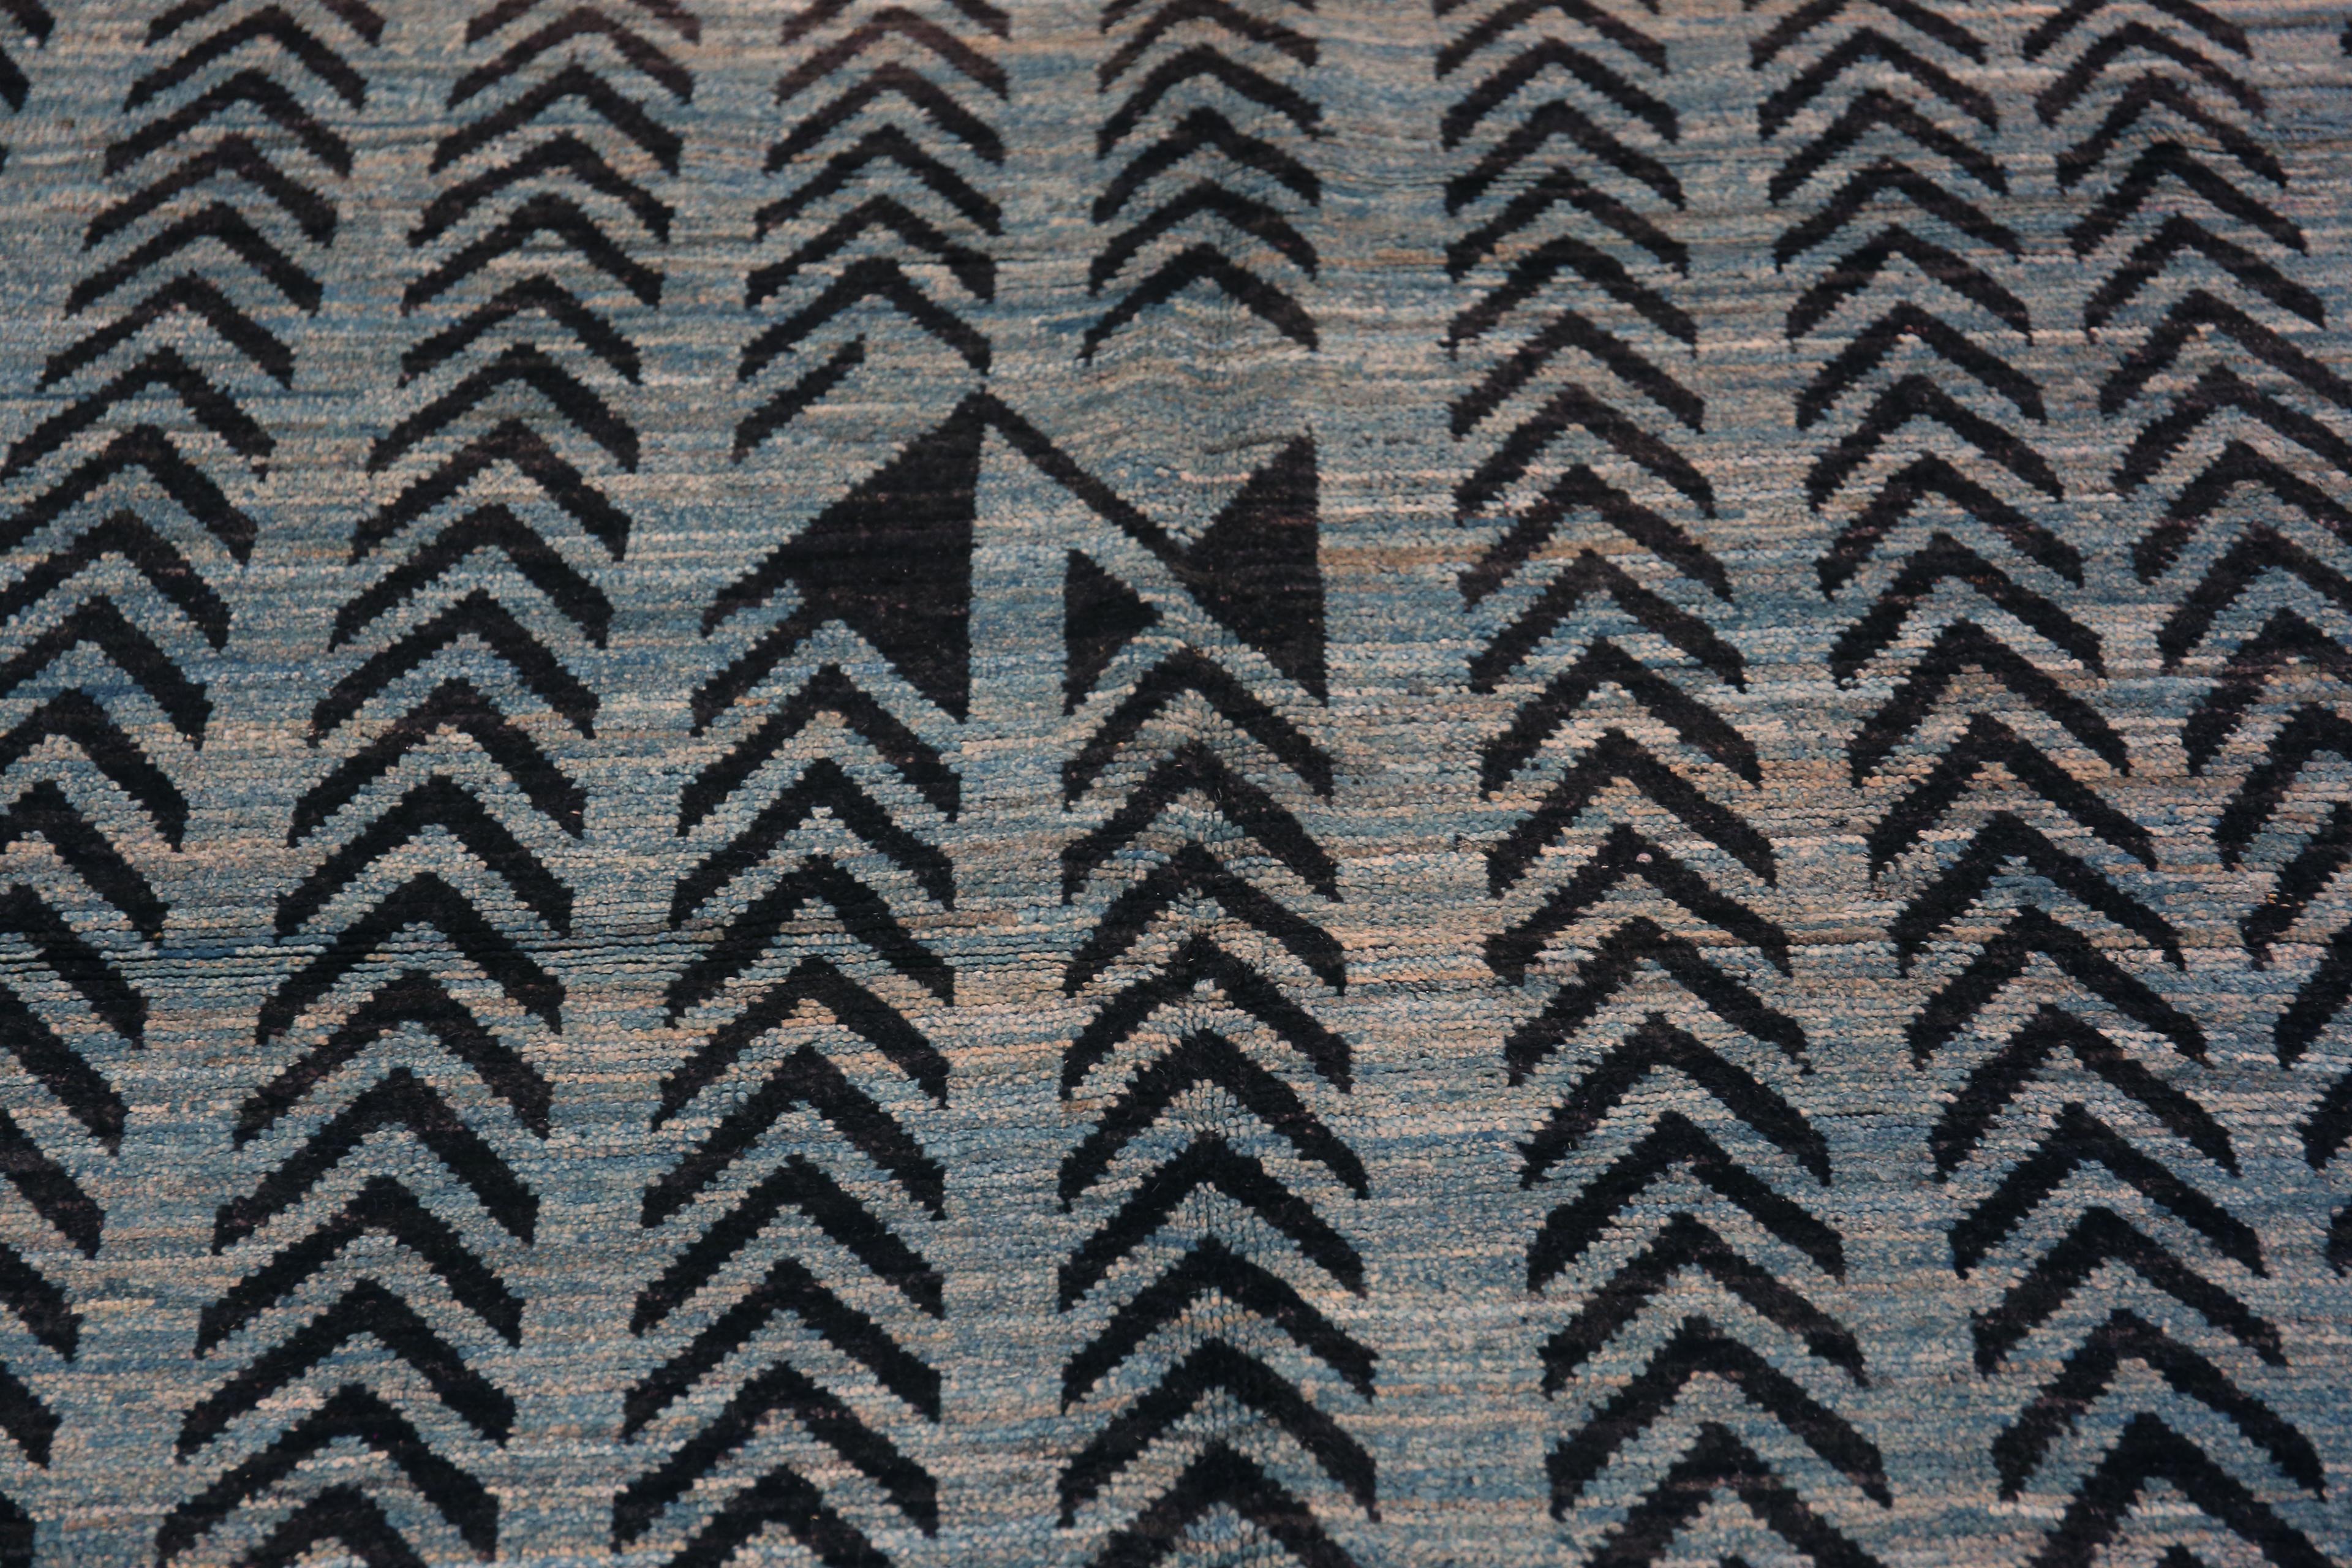 Nazmiyal Collection Light Blue Charcoal Tribal Geometric Pattern Rug 7' x 9'3